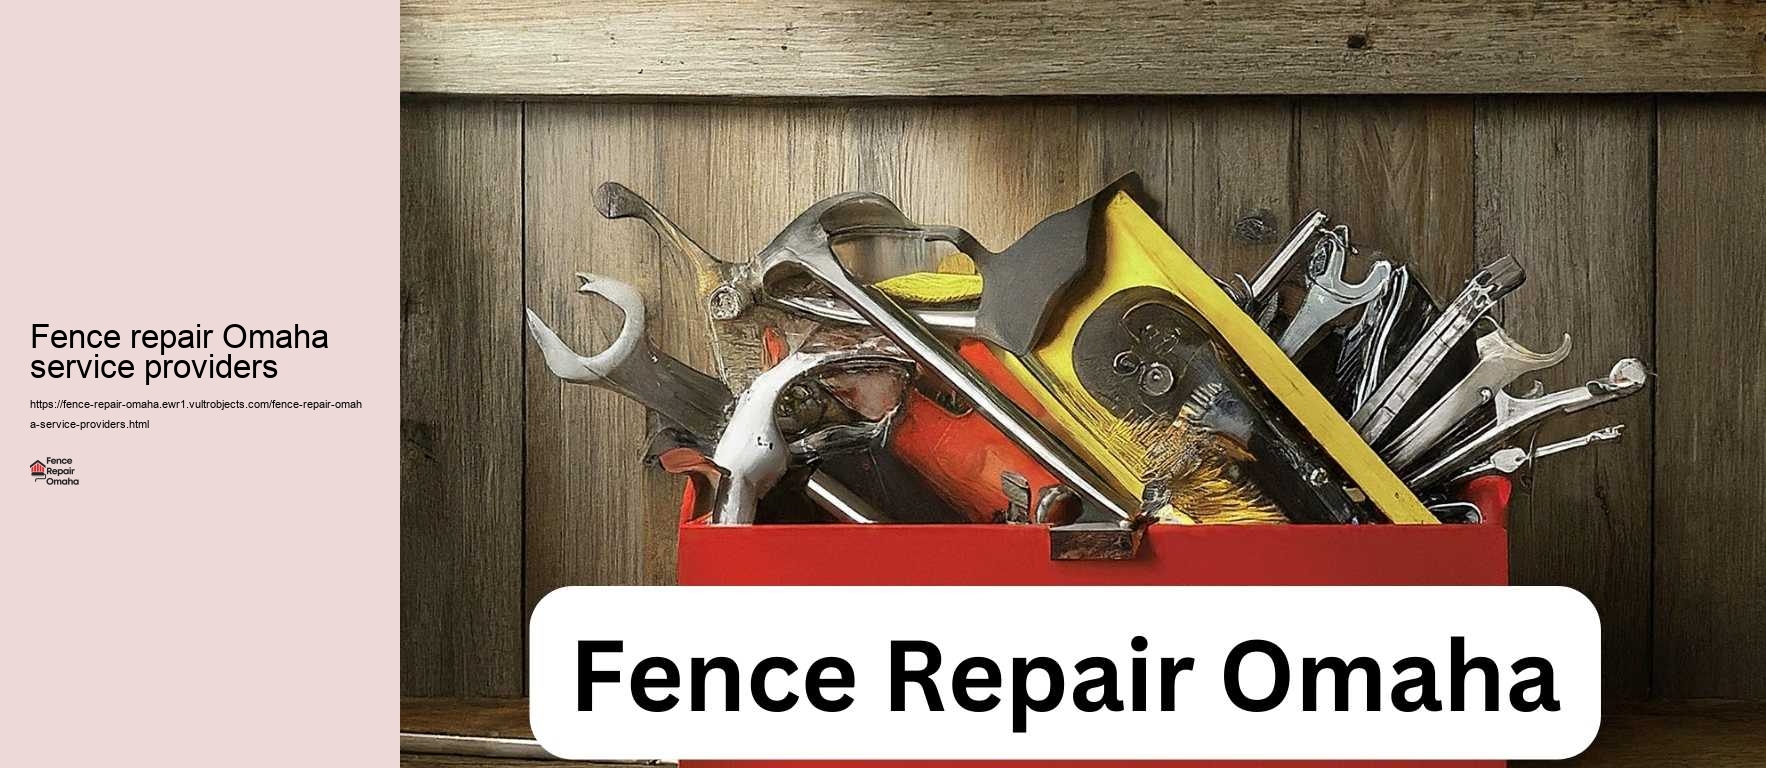 Fence repair Omaha service providers